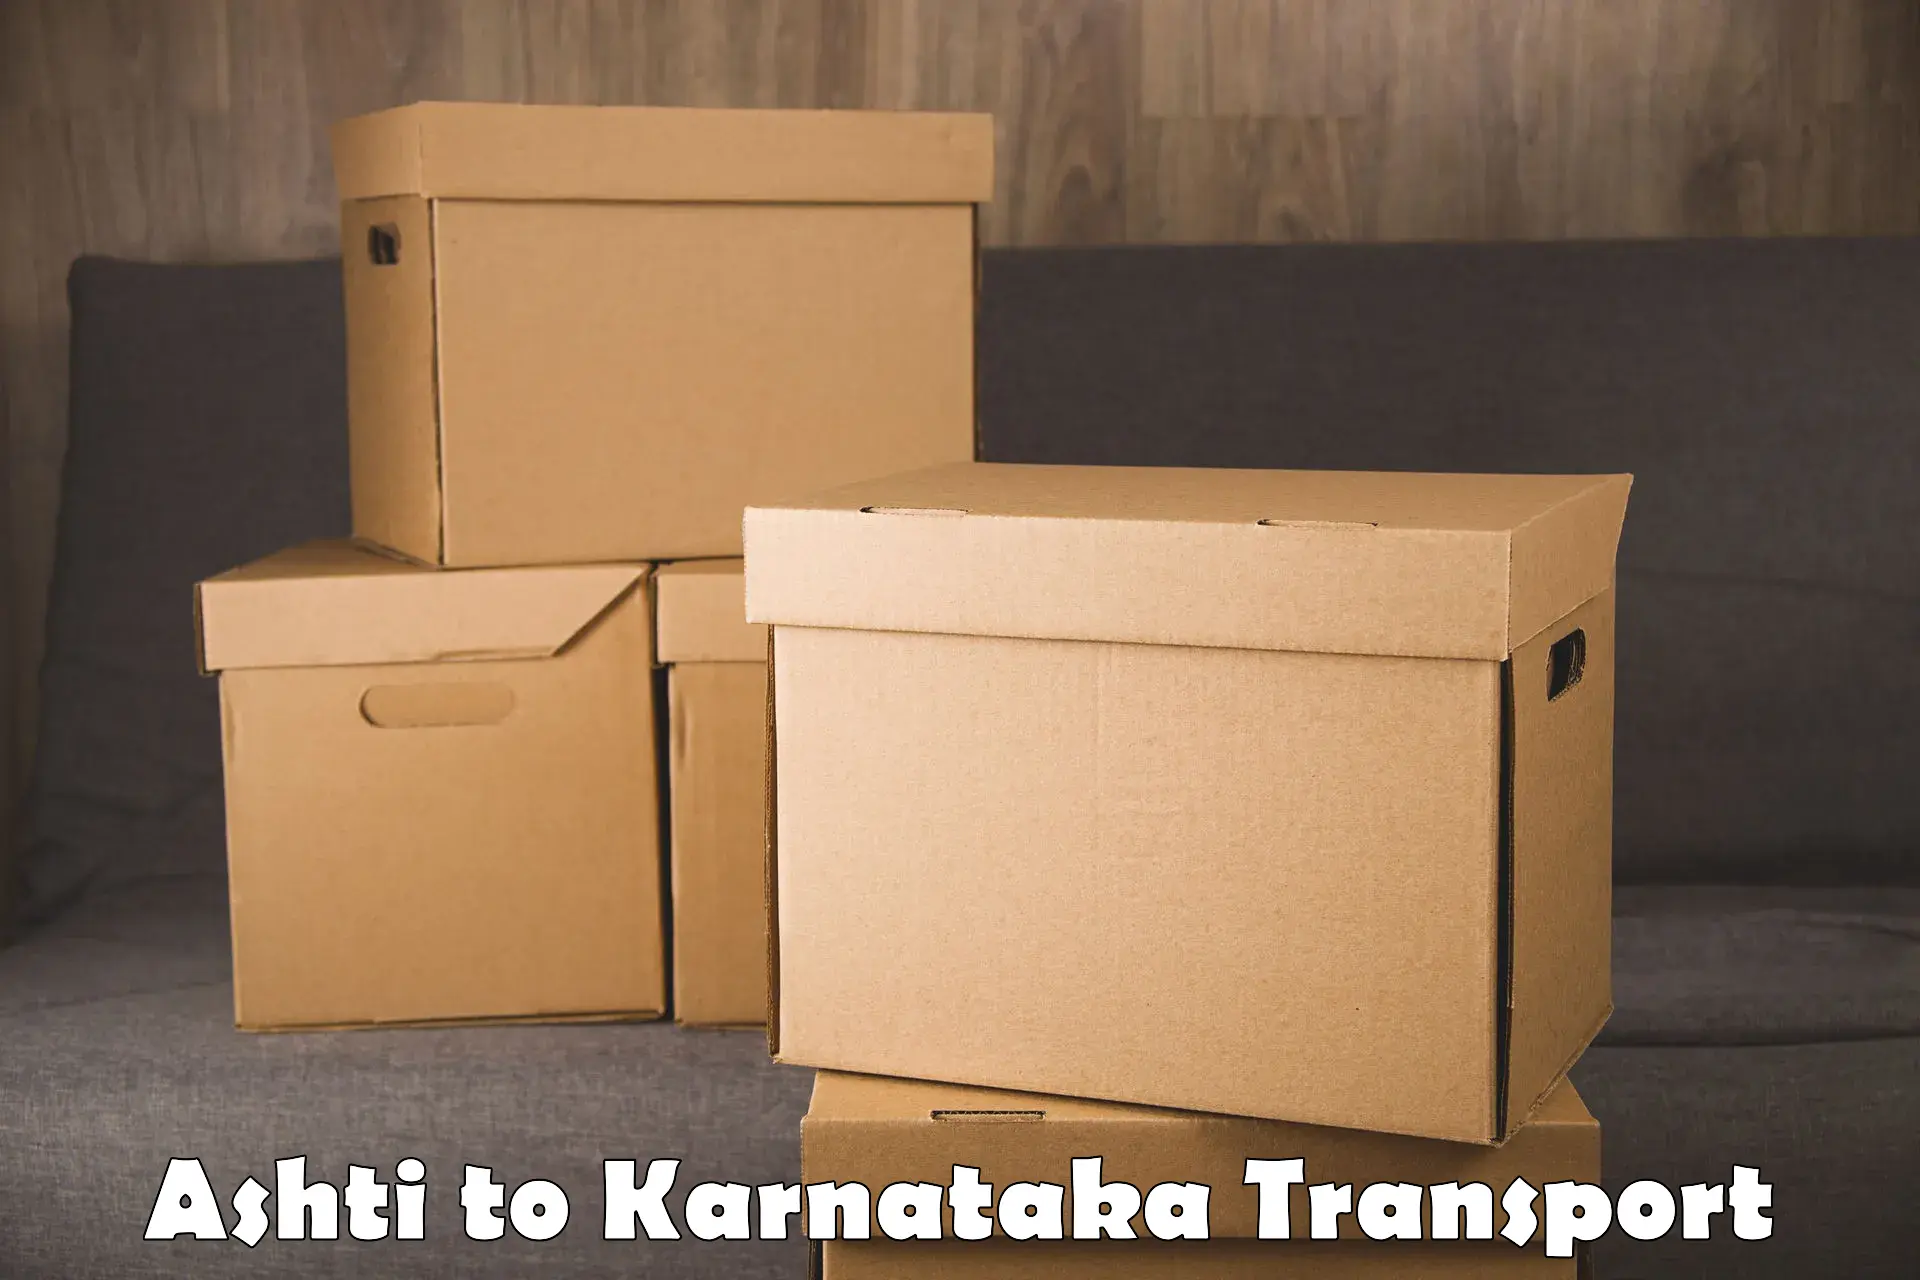 Furniture transport service Ashti to Shorapur